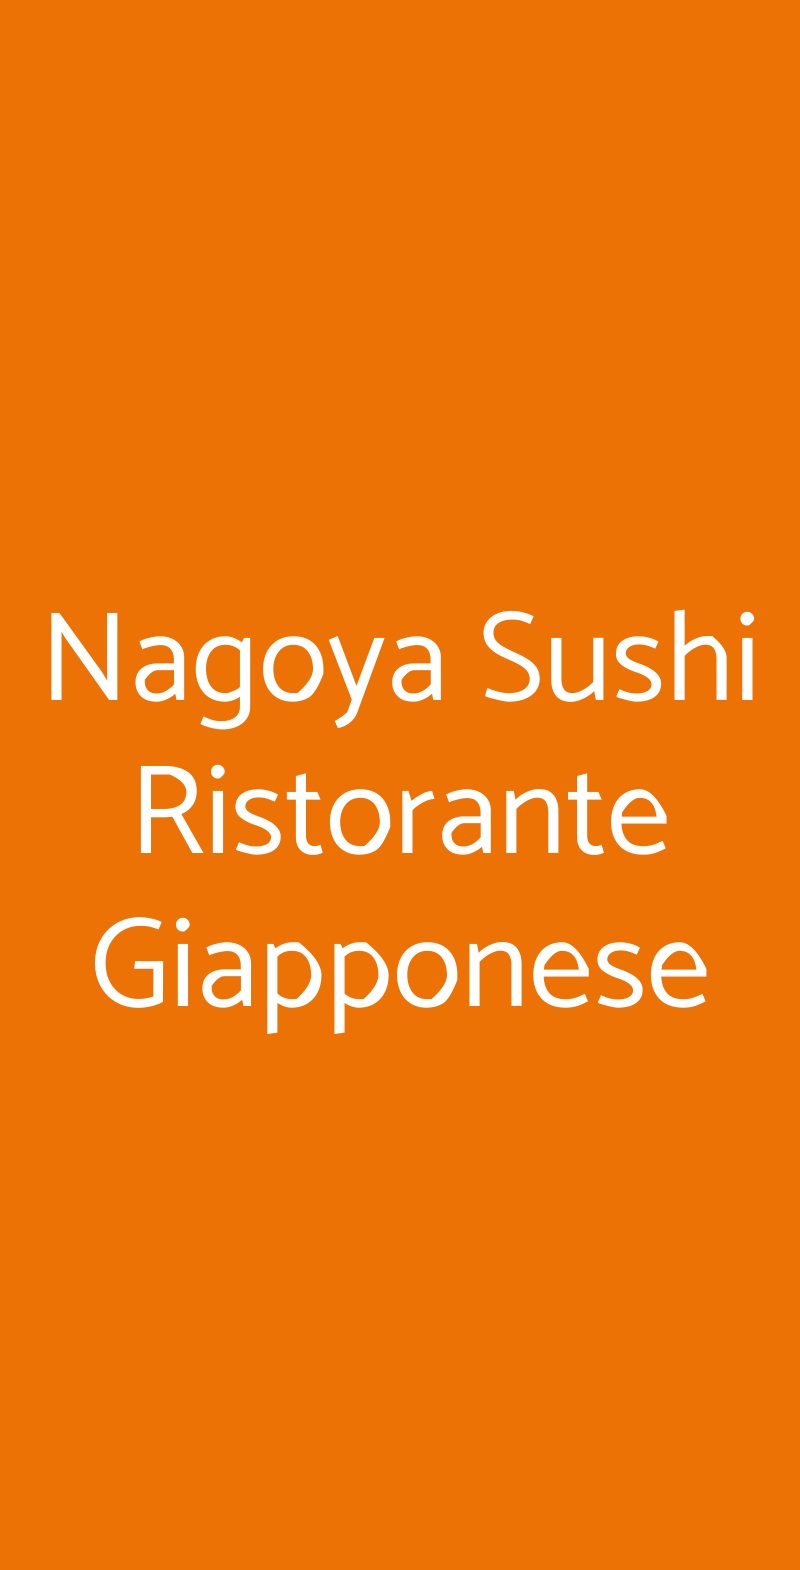 Nagoya Sushi Ristorante Giapponese Ravenna menù 1 pagina